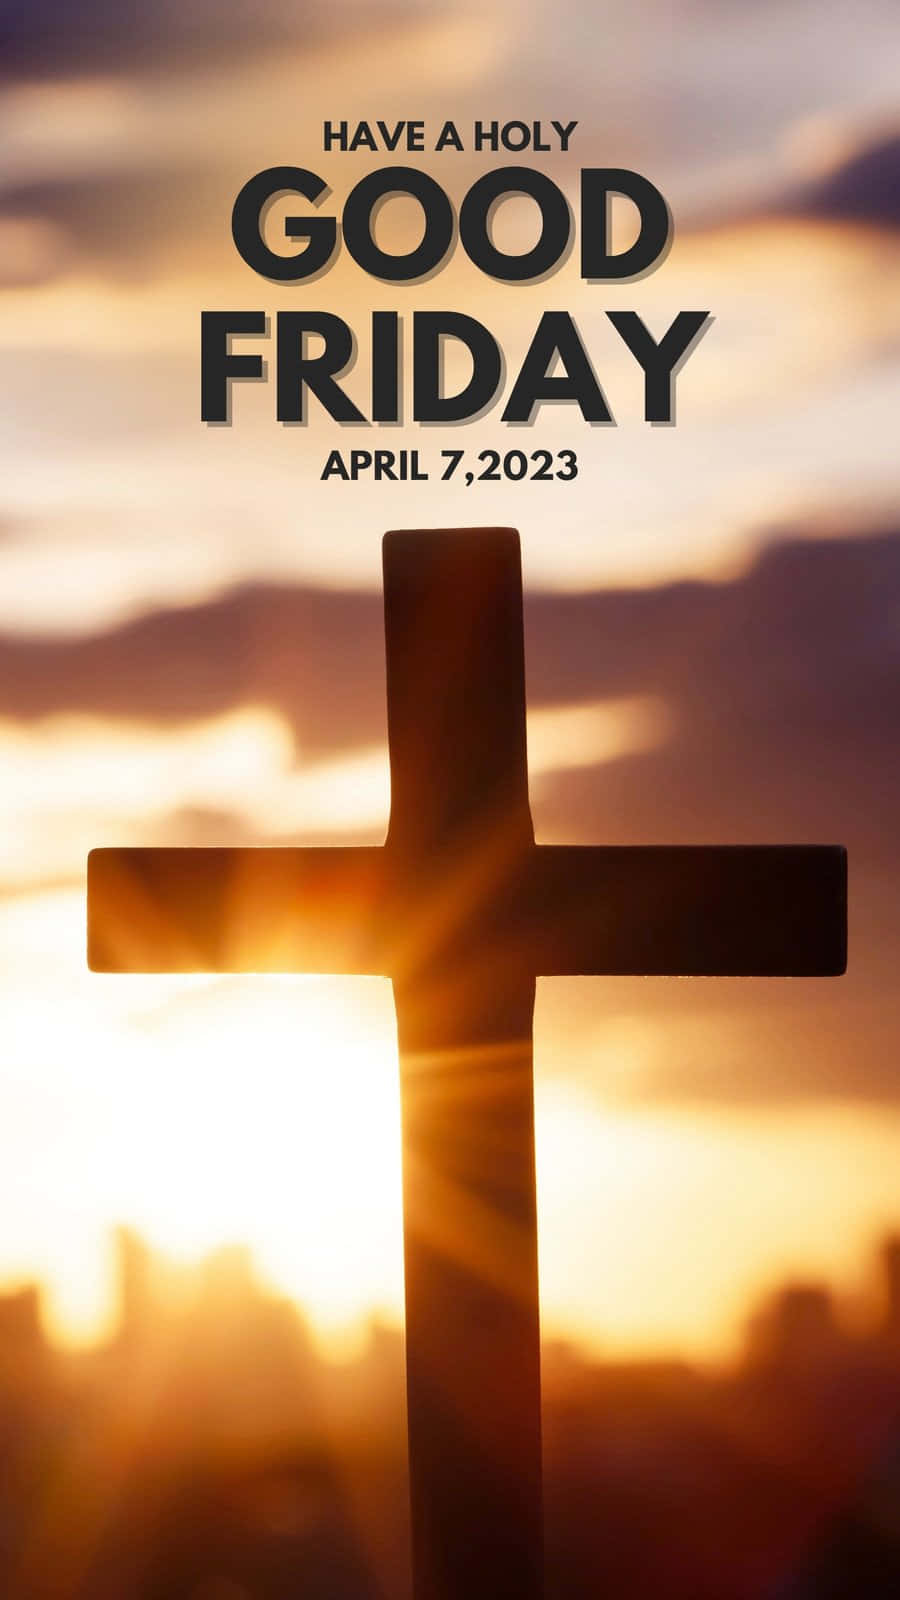 Solemn Cross on Good Friday